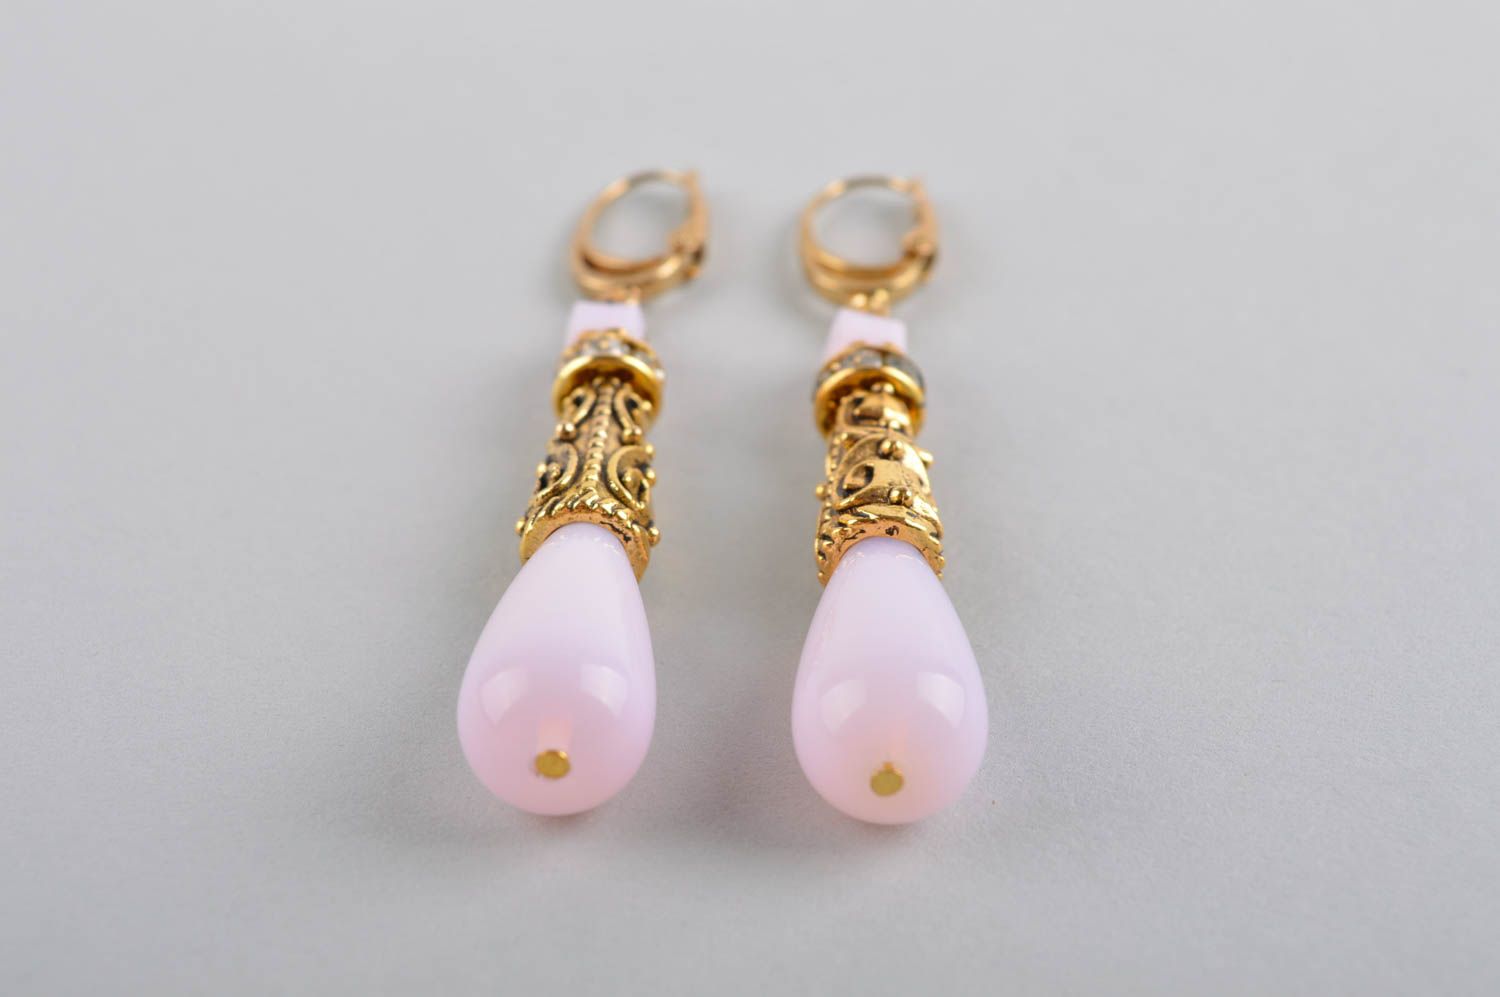 Handmade earrings gemstone jewelry earrings for girls designer accessories photo 4